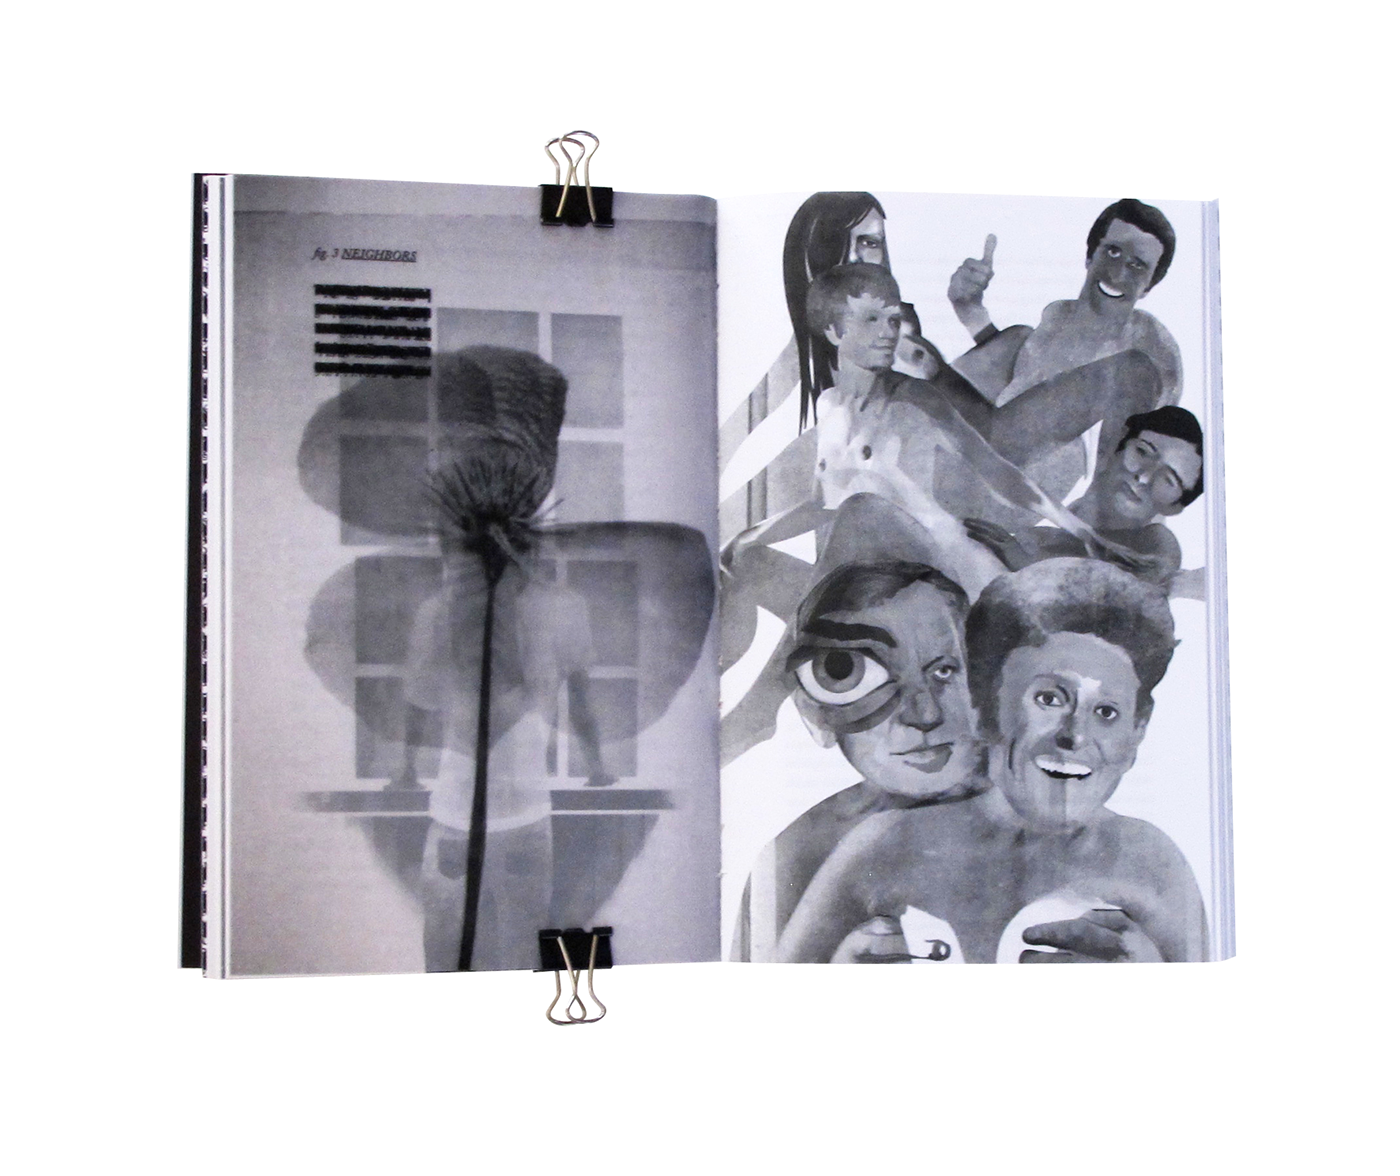 book Selfpublishing digitalart compart graphicdesign Flowers Relationships youth comingofage Eastcoast